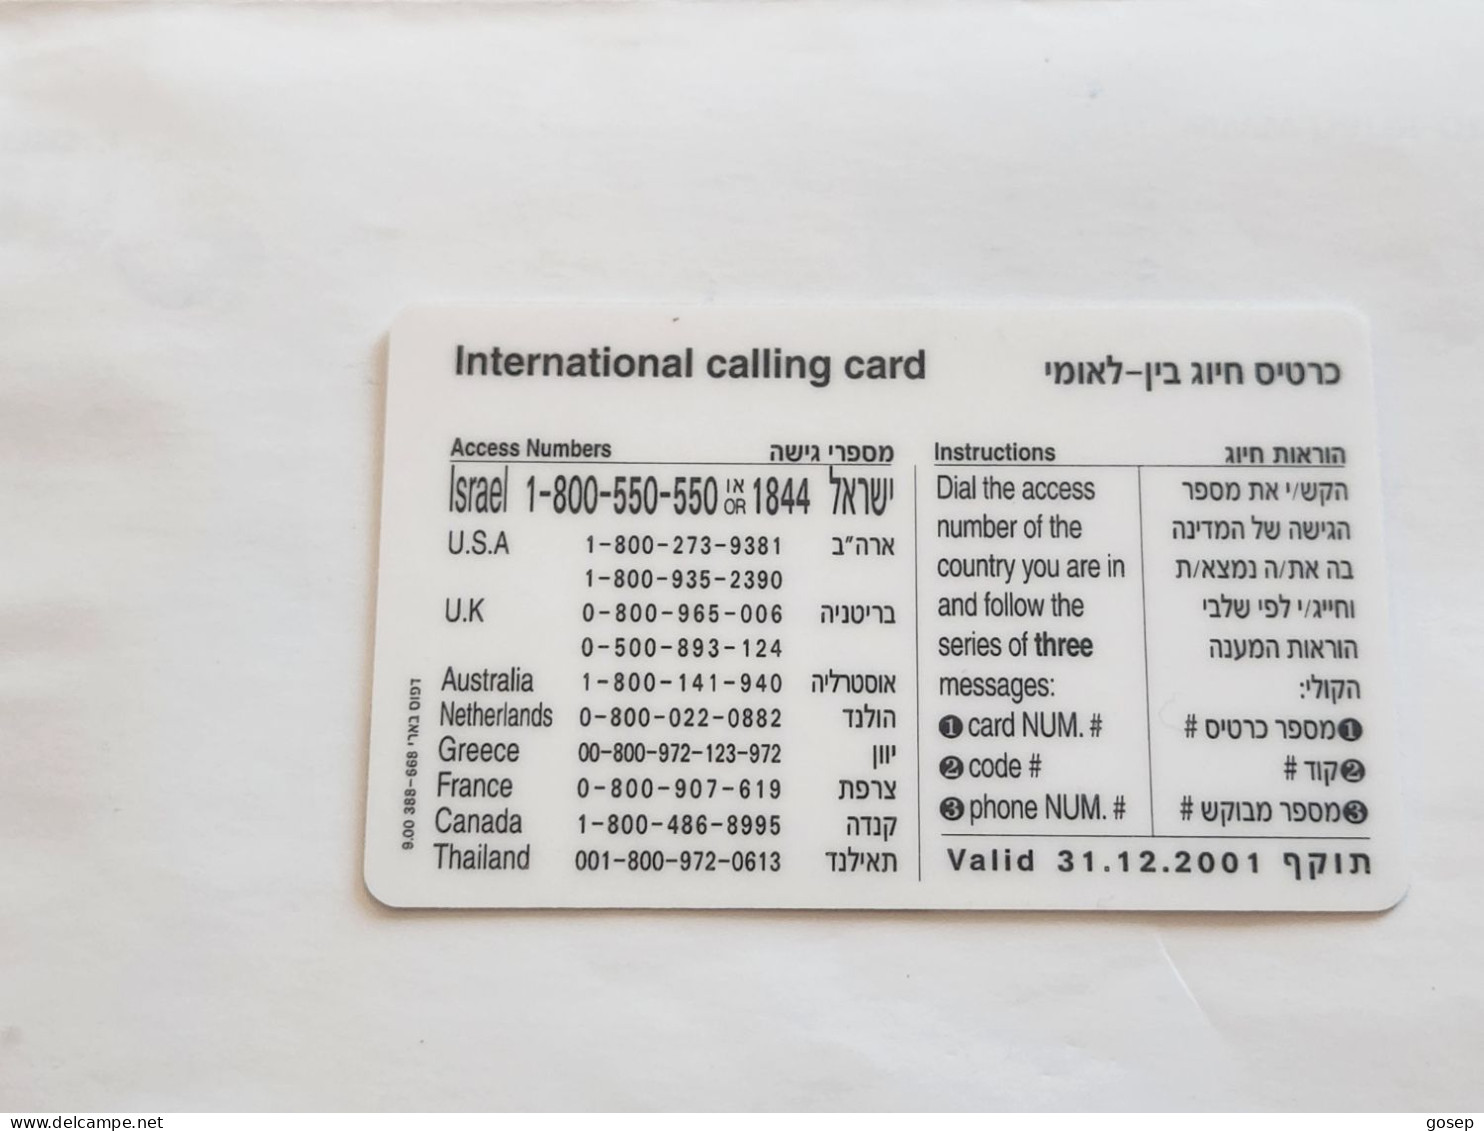 ISRAEL-(BEZ-INTER-737)-Gideon Aloni-Company-(40)(100uits)(21770342-3300)(plastic Card)Expansive Card - Israël